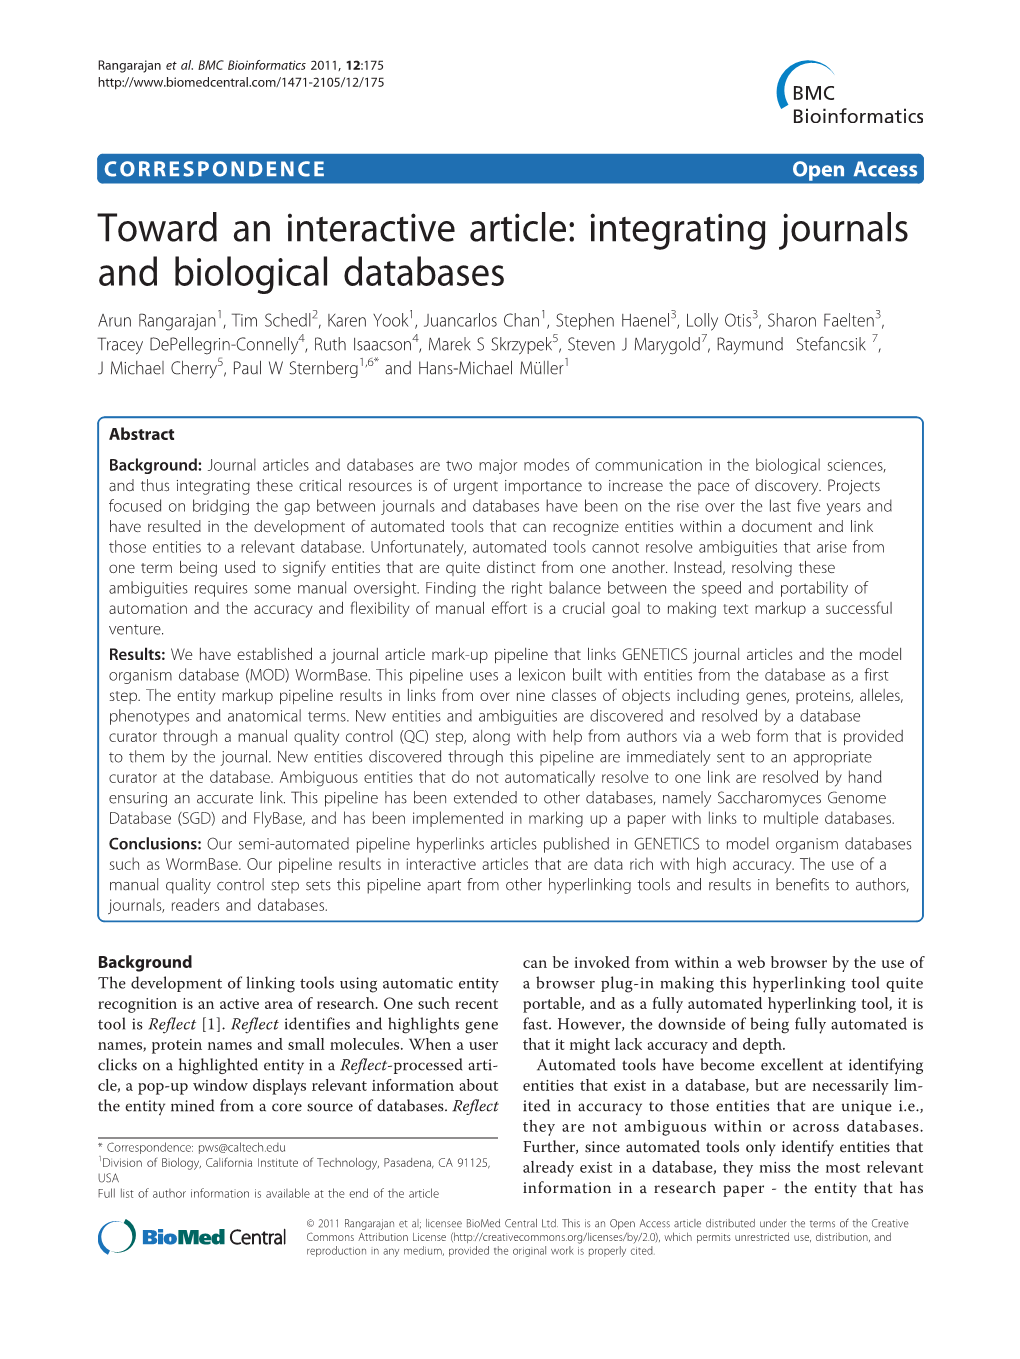 Integrating Journals and Biological Databases